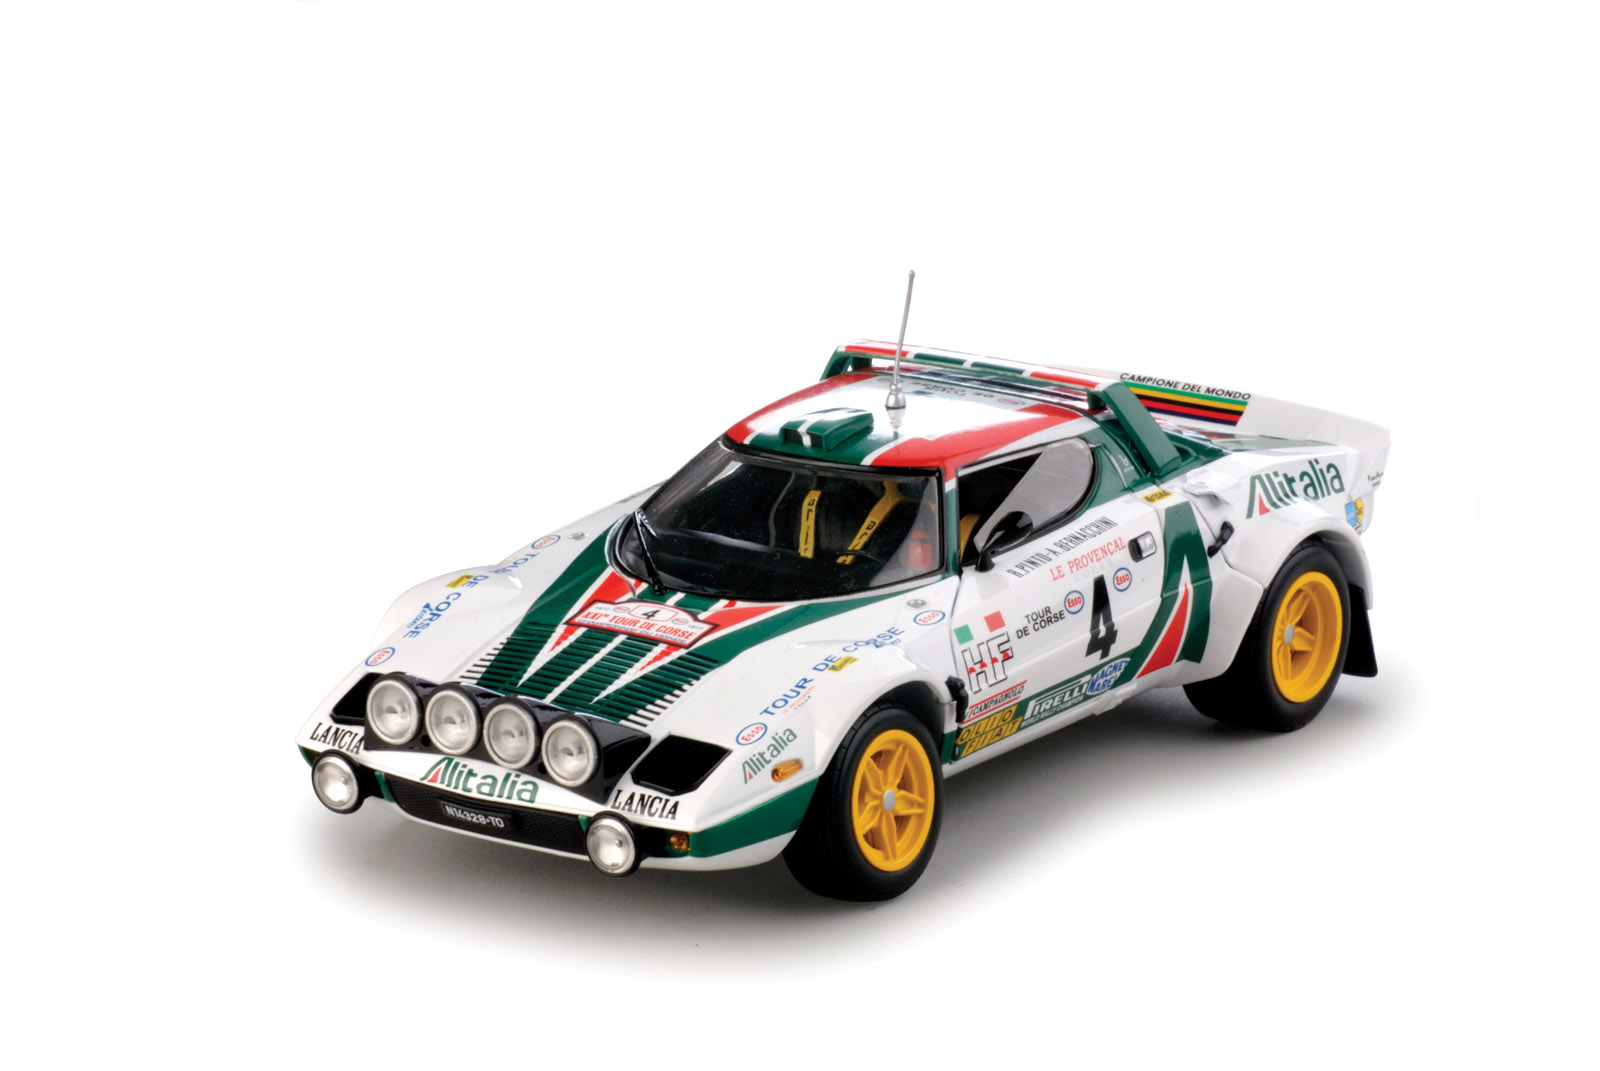 Sunstar 1/18 4528 Lancia Stratos HF Rally #14 Rally Sanremo 78 Vudafieri 